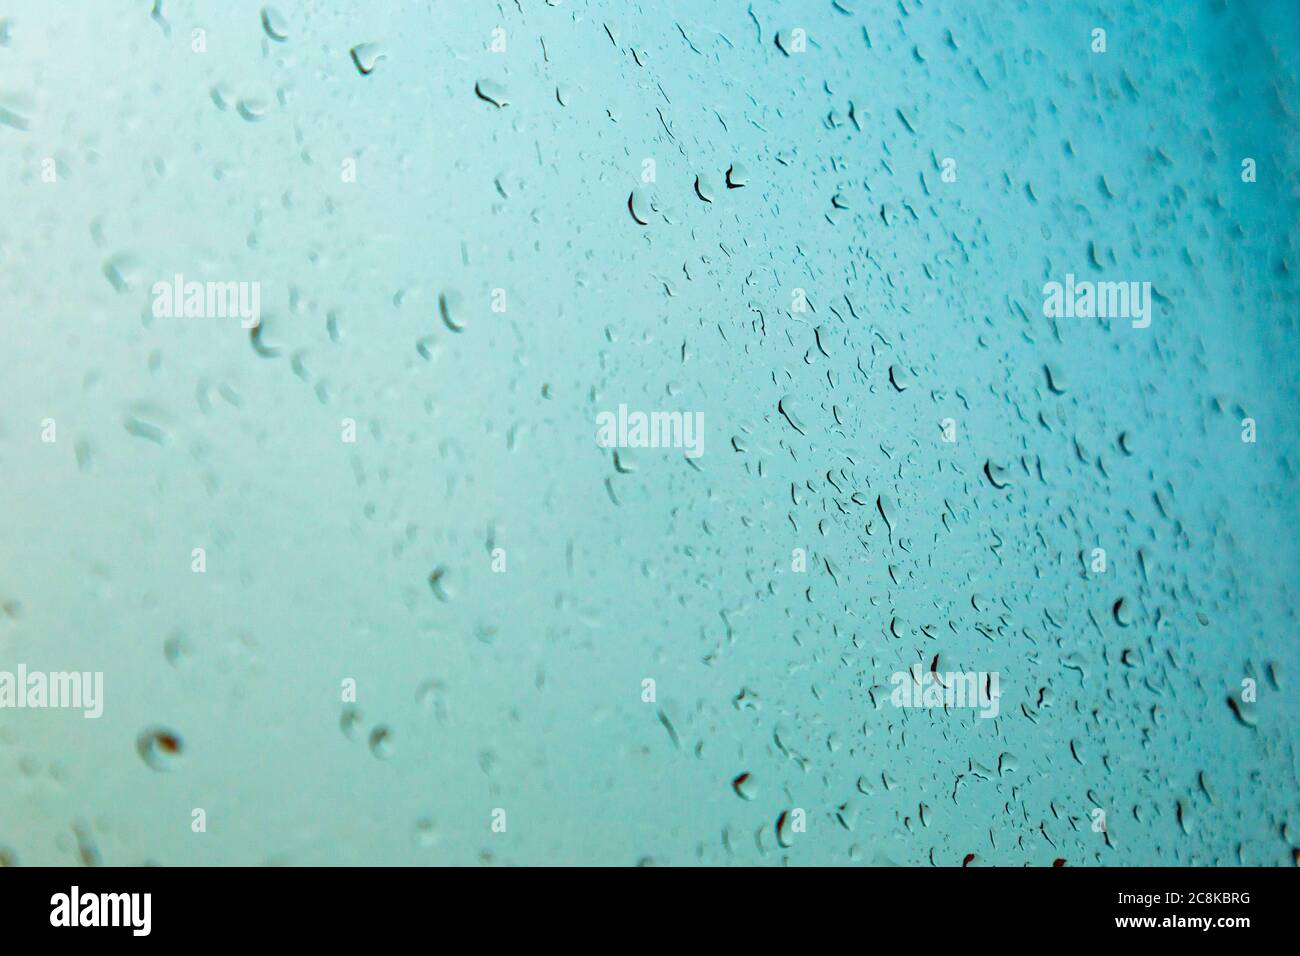 Rain droplets on a glass sheet Stock Photo